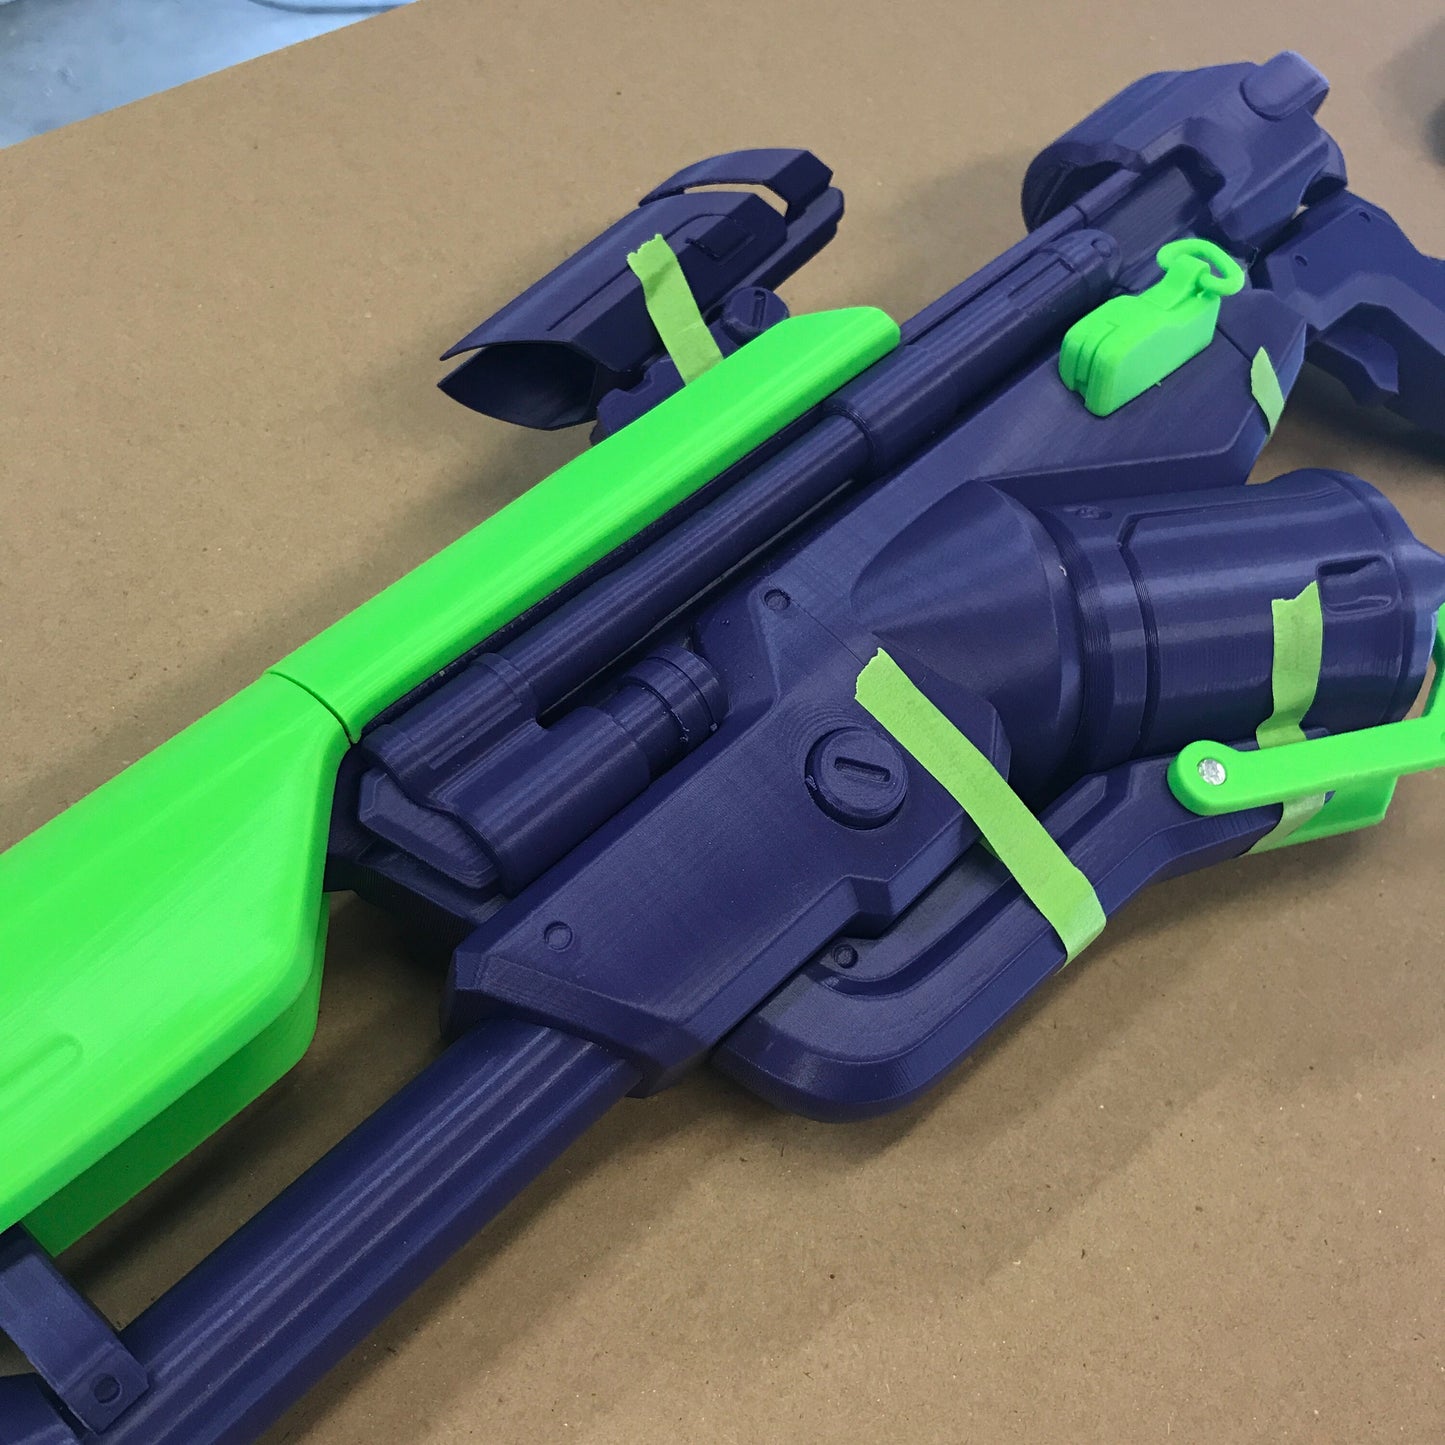 Ana Biotic Rifle Cosplay - 3D Printed kit